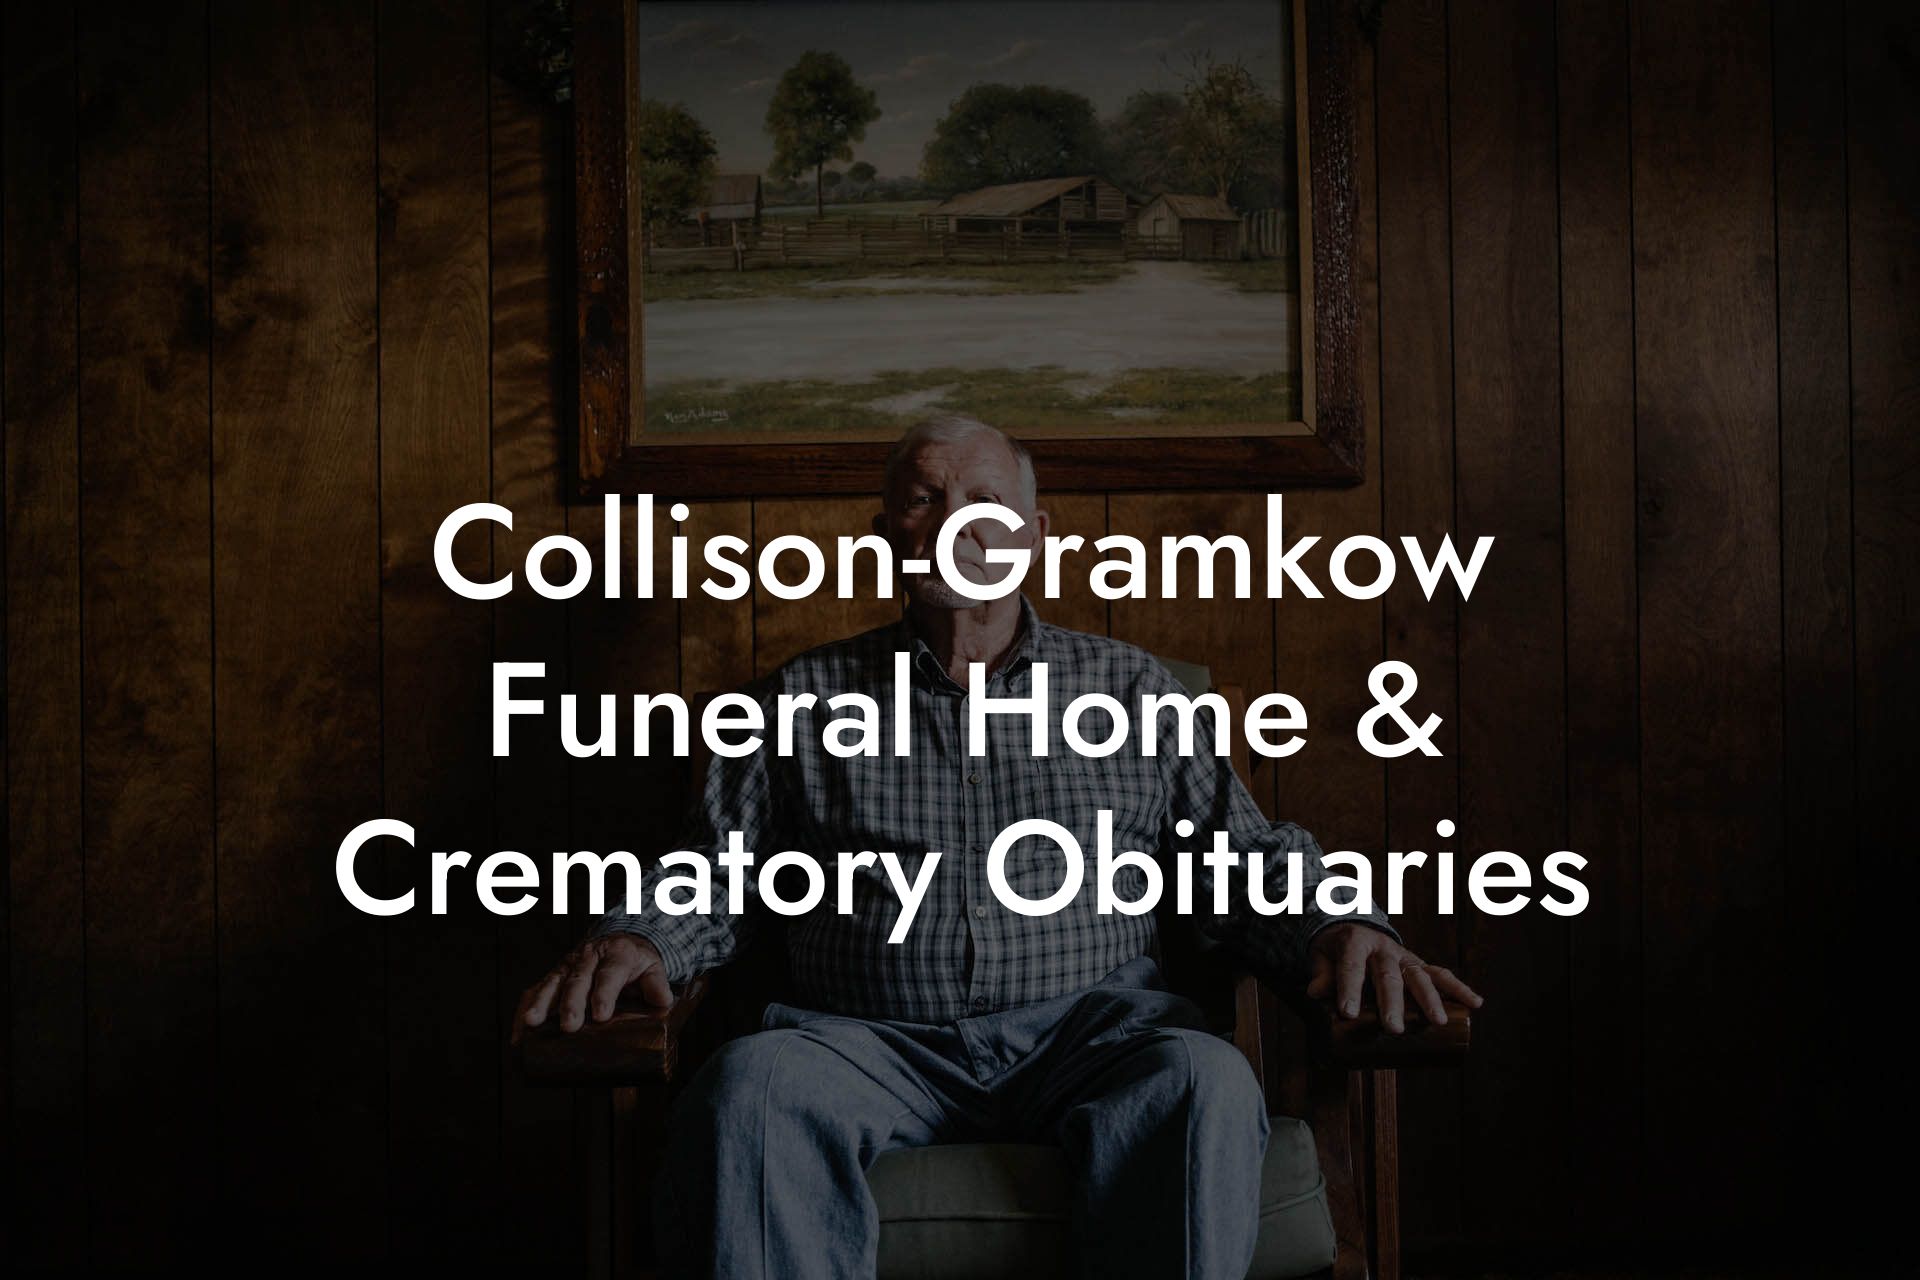 Collison-Gramkow Funeral Home & Crematory Obituaries